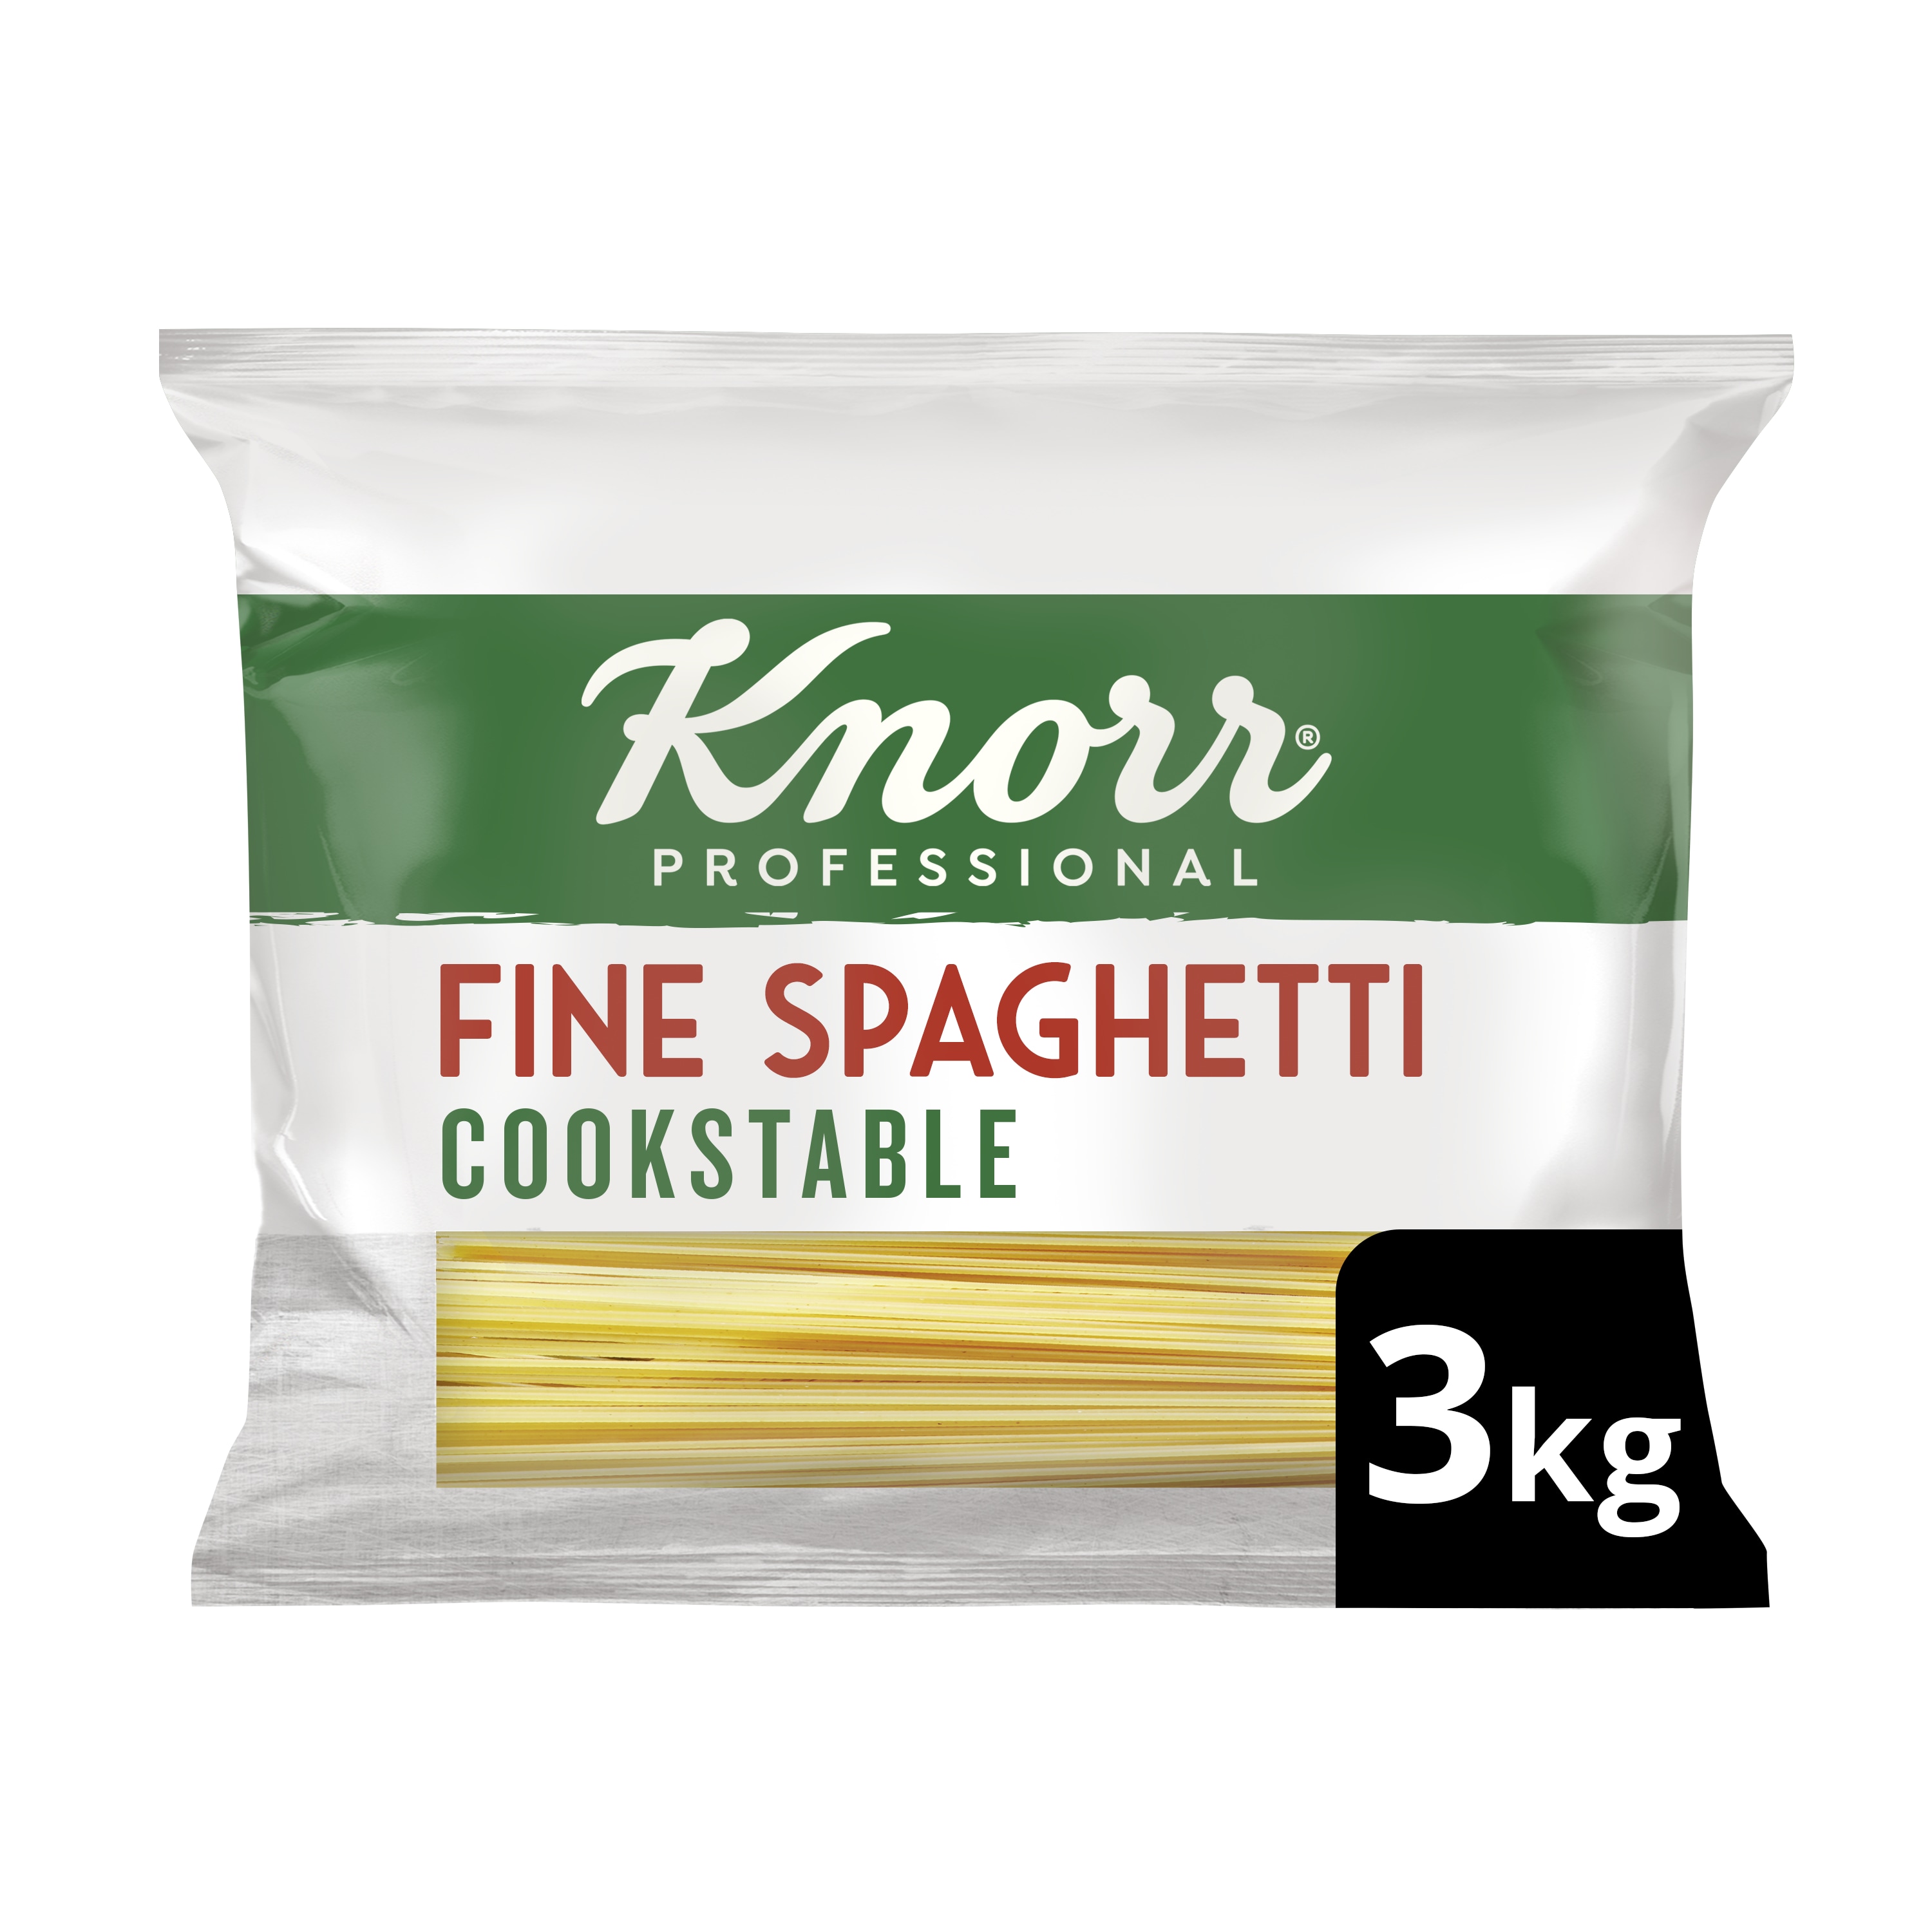 Knorr Collezione Italiana Fijne Spaghetti Kookstabiel 3kg - 